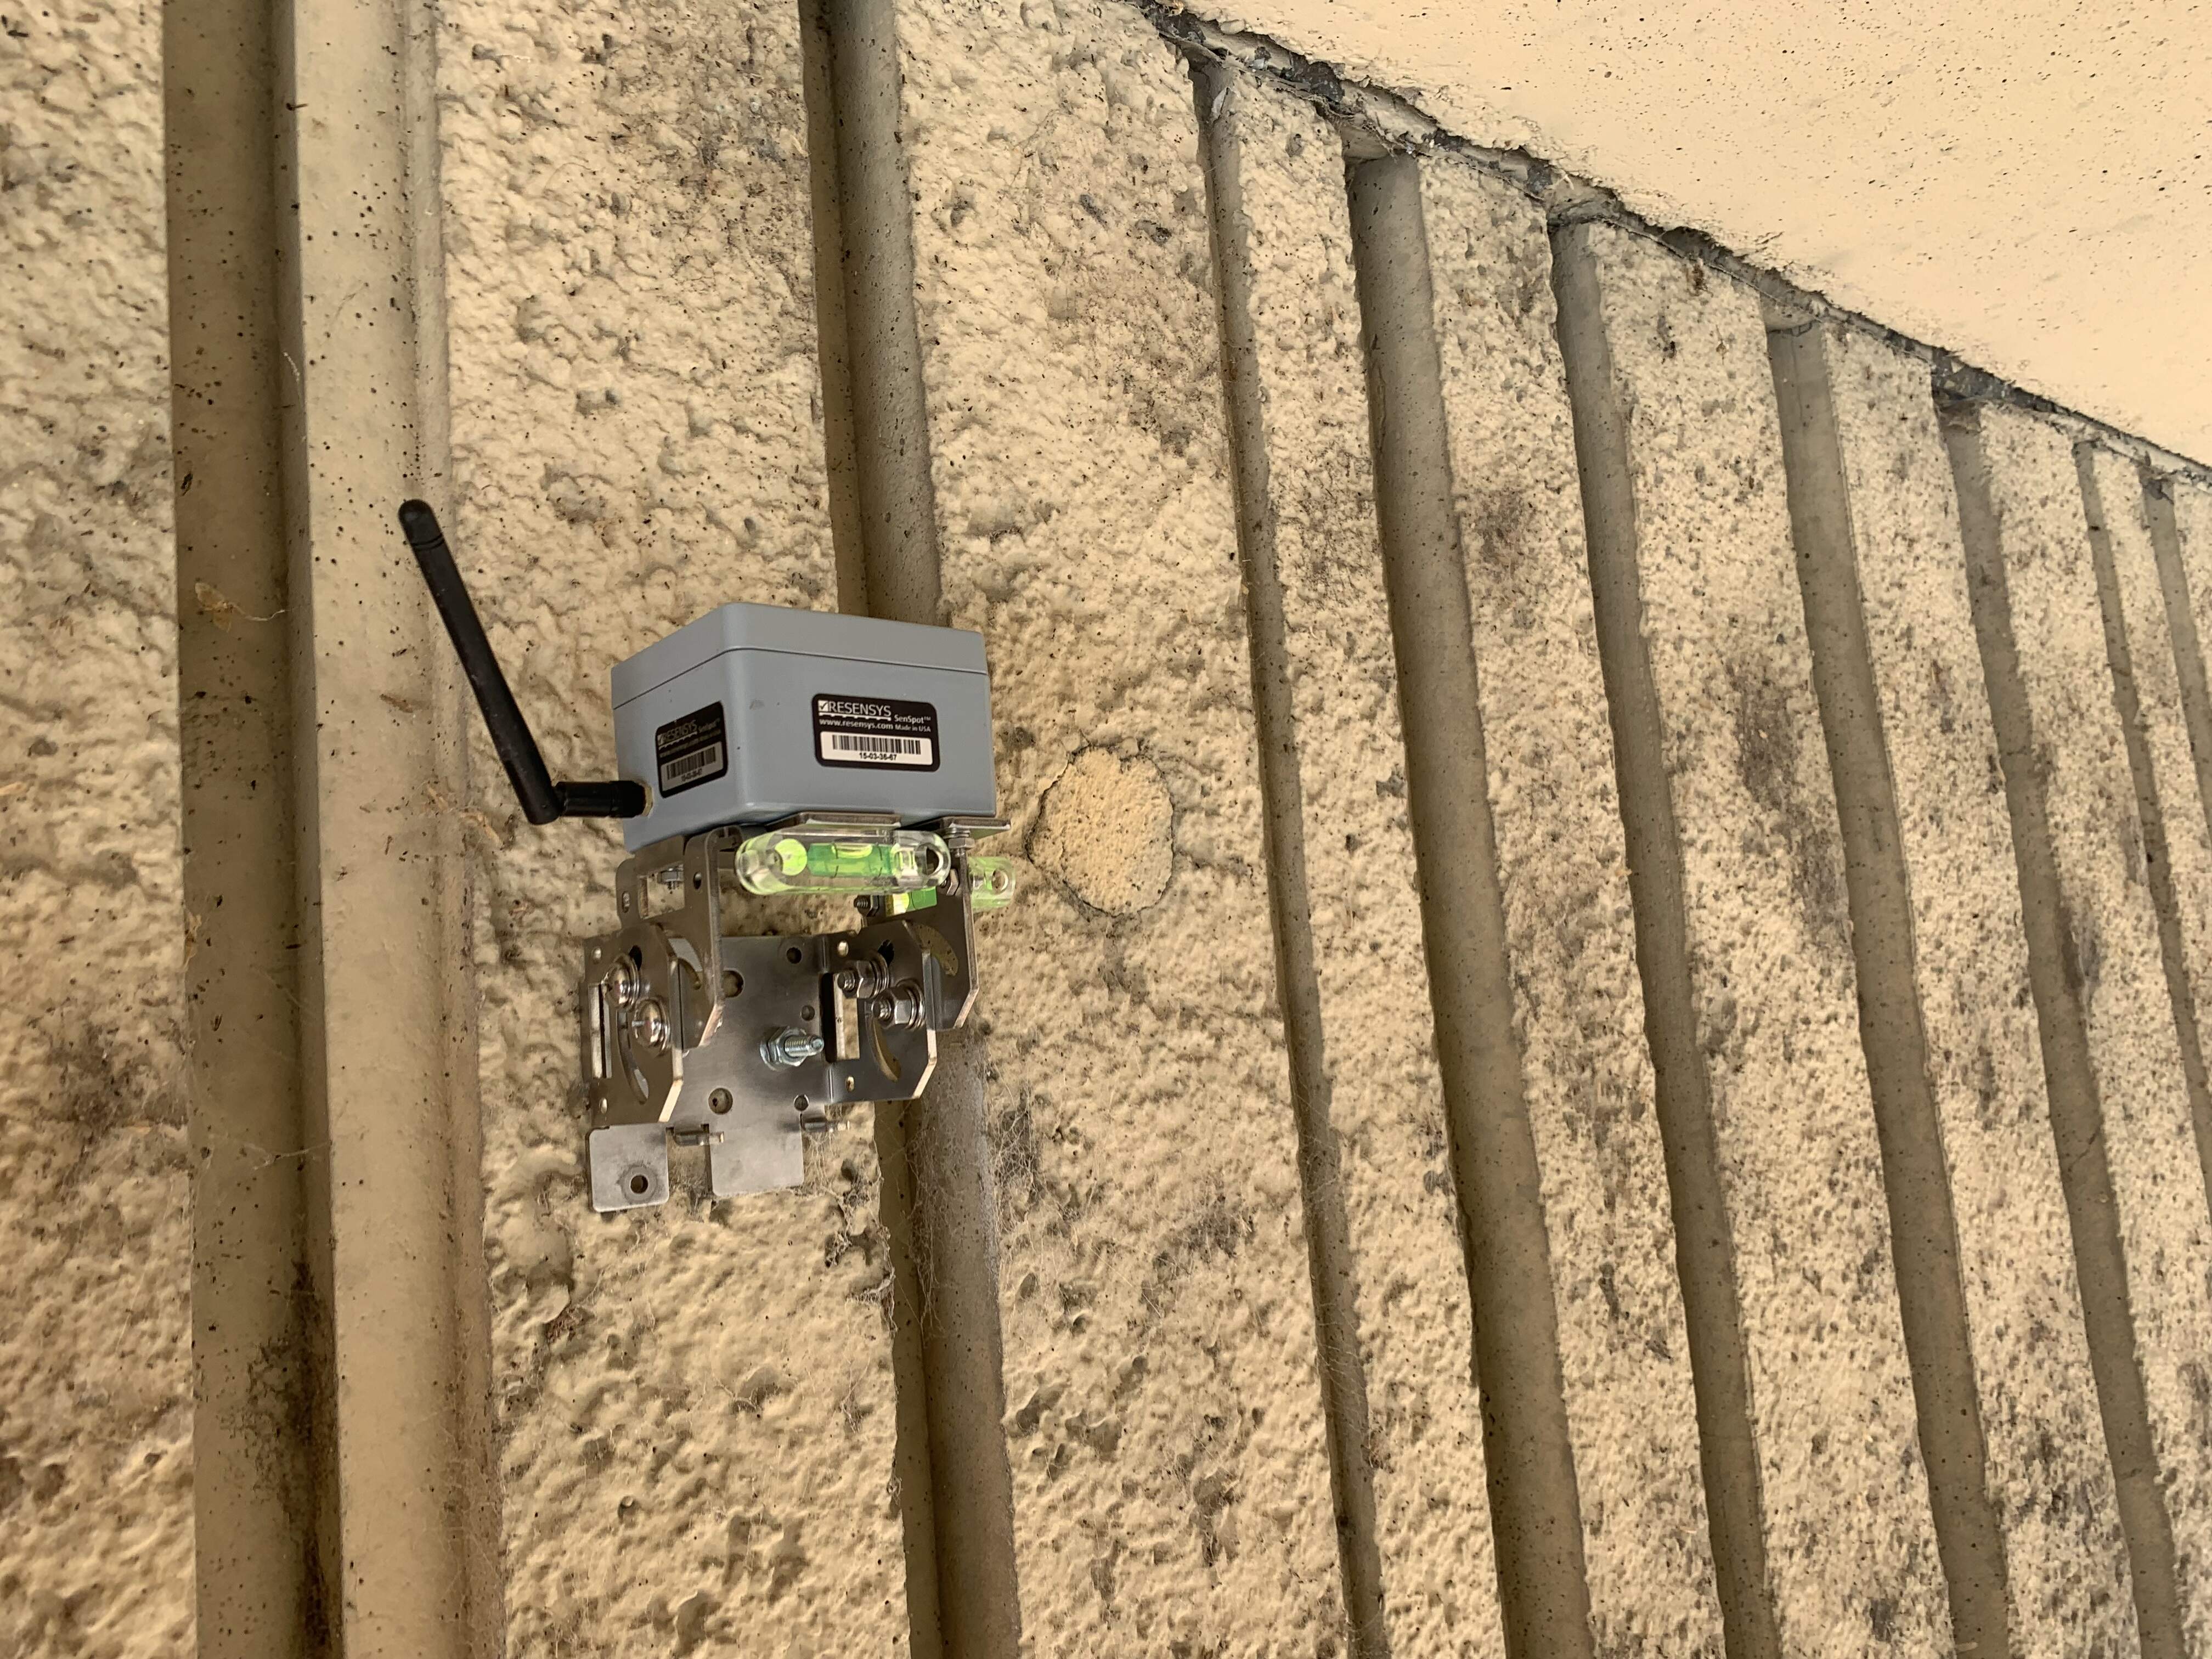 Resensys wireless tilt SenSpot sensor (inclinometer) on Retaining wall for remote monitoring